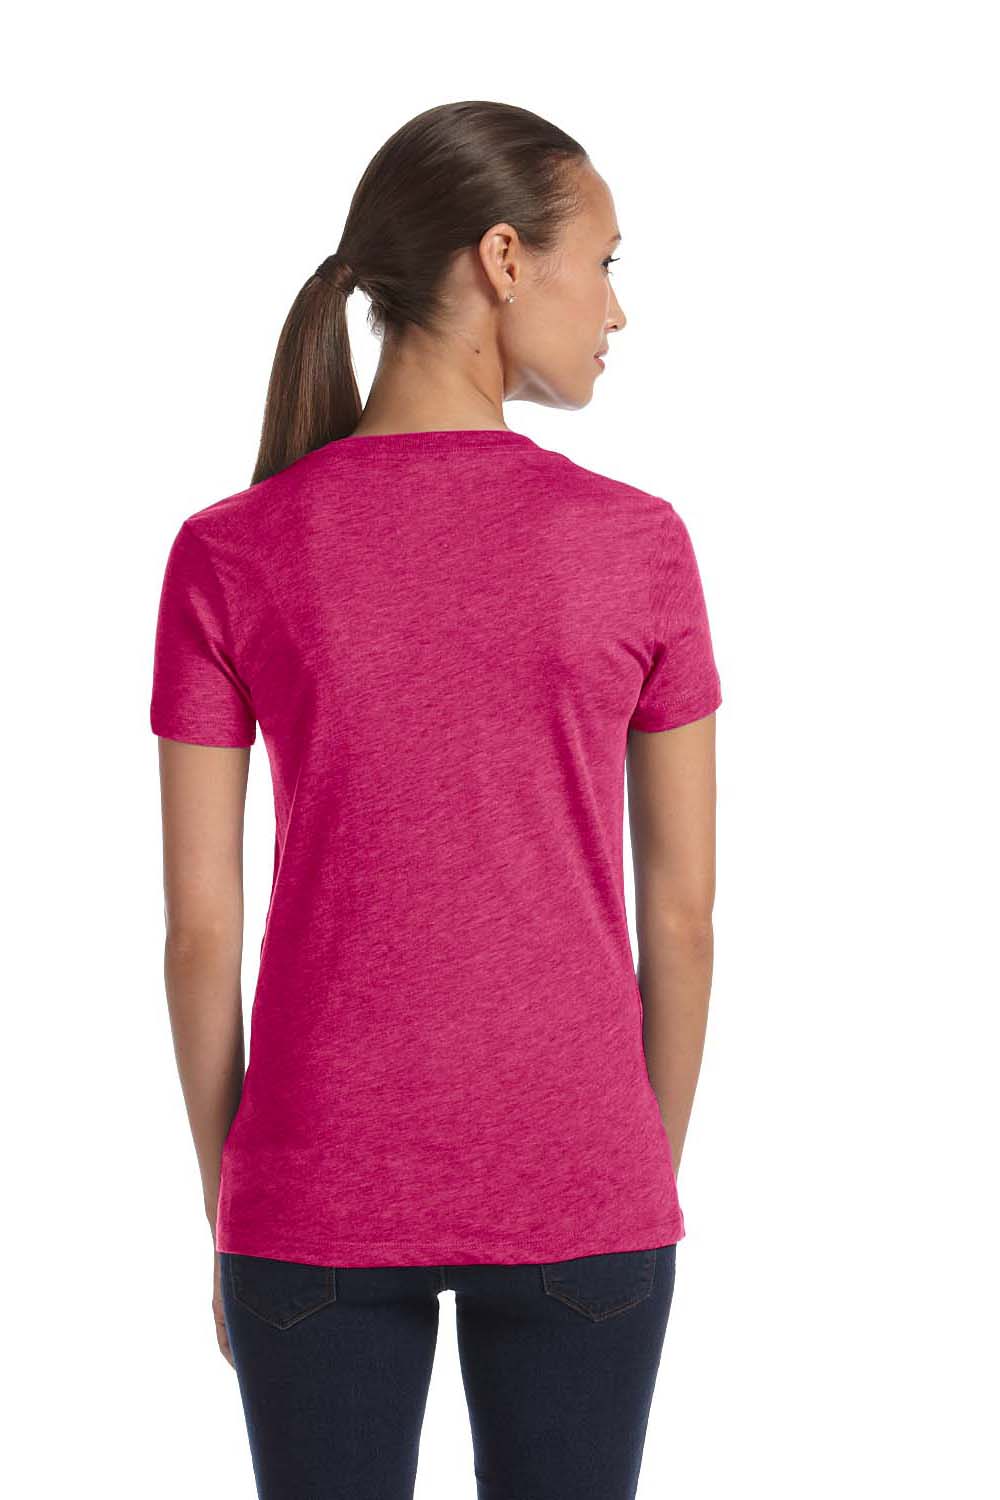 Bella + Canvas 8435 Womens Short Sleeve Deep V-Neck T-Shirt Berry Pink Back